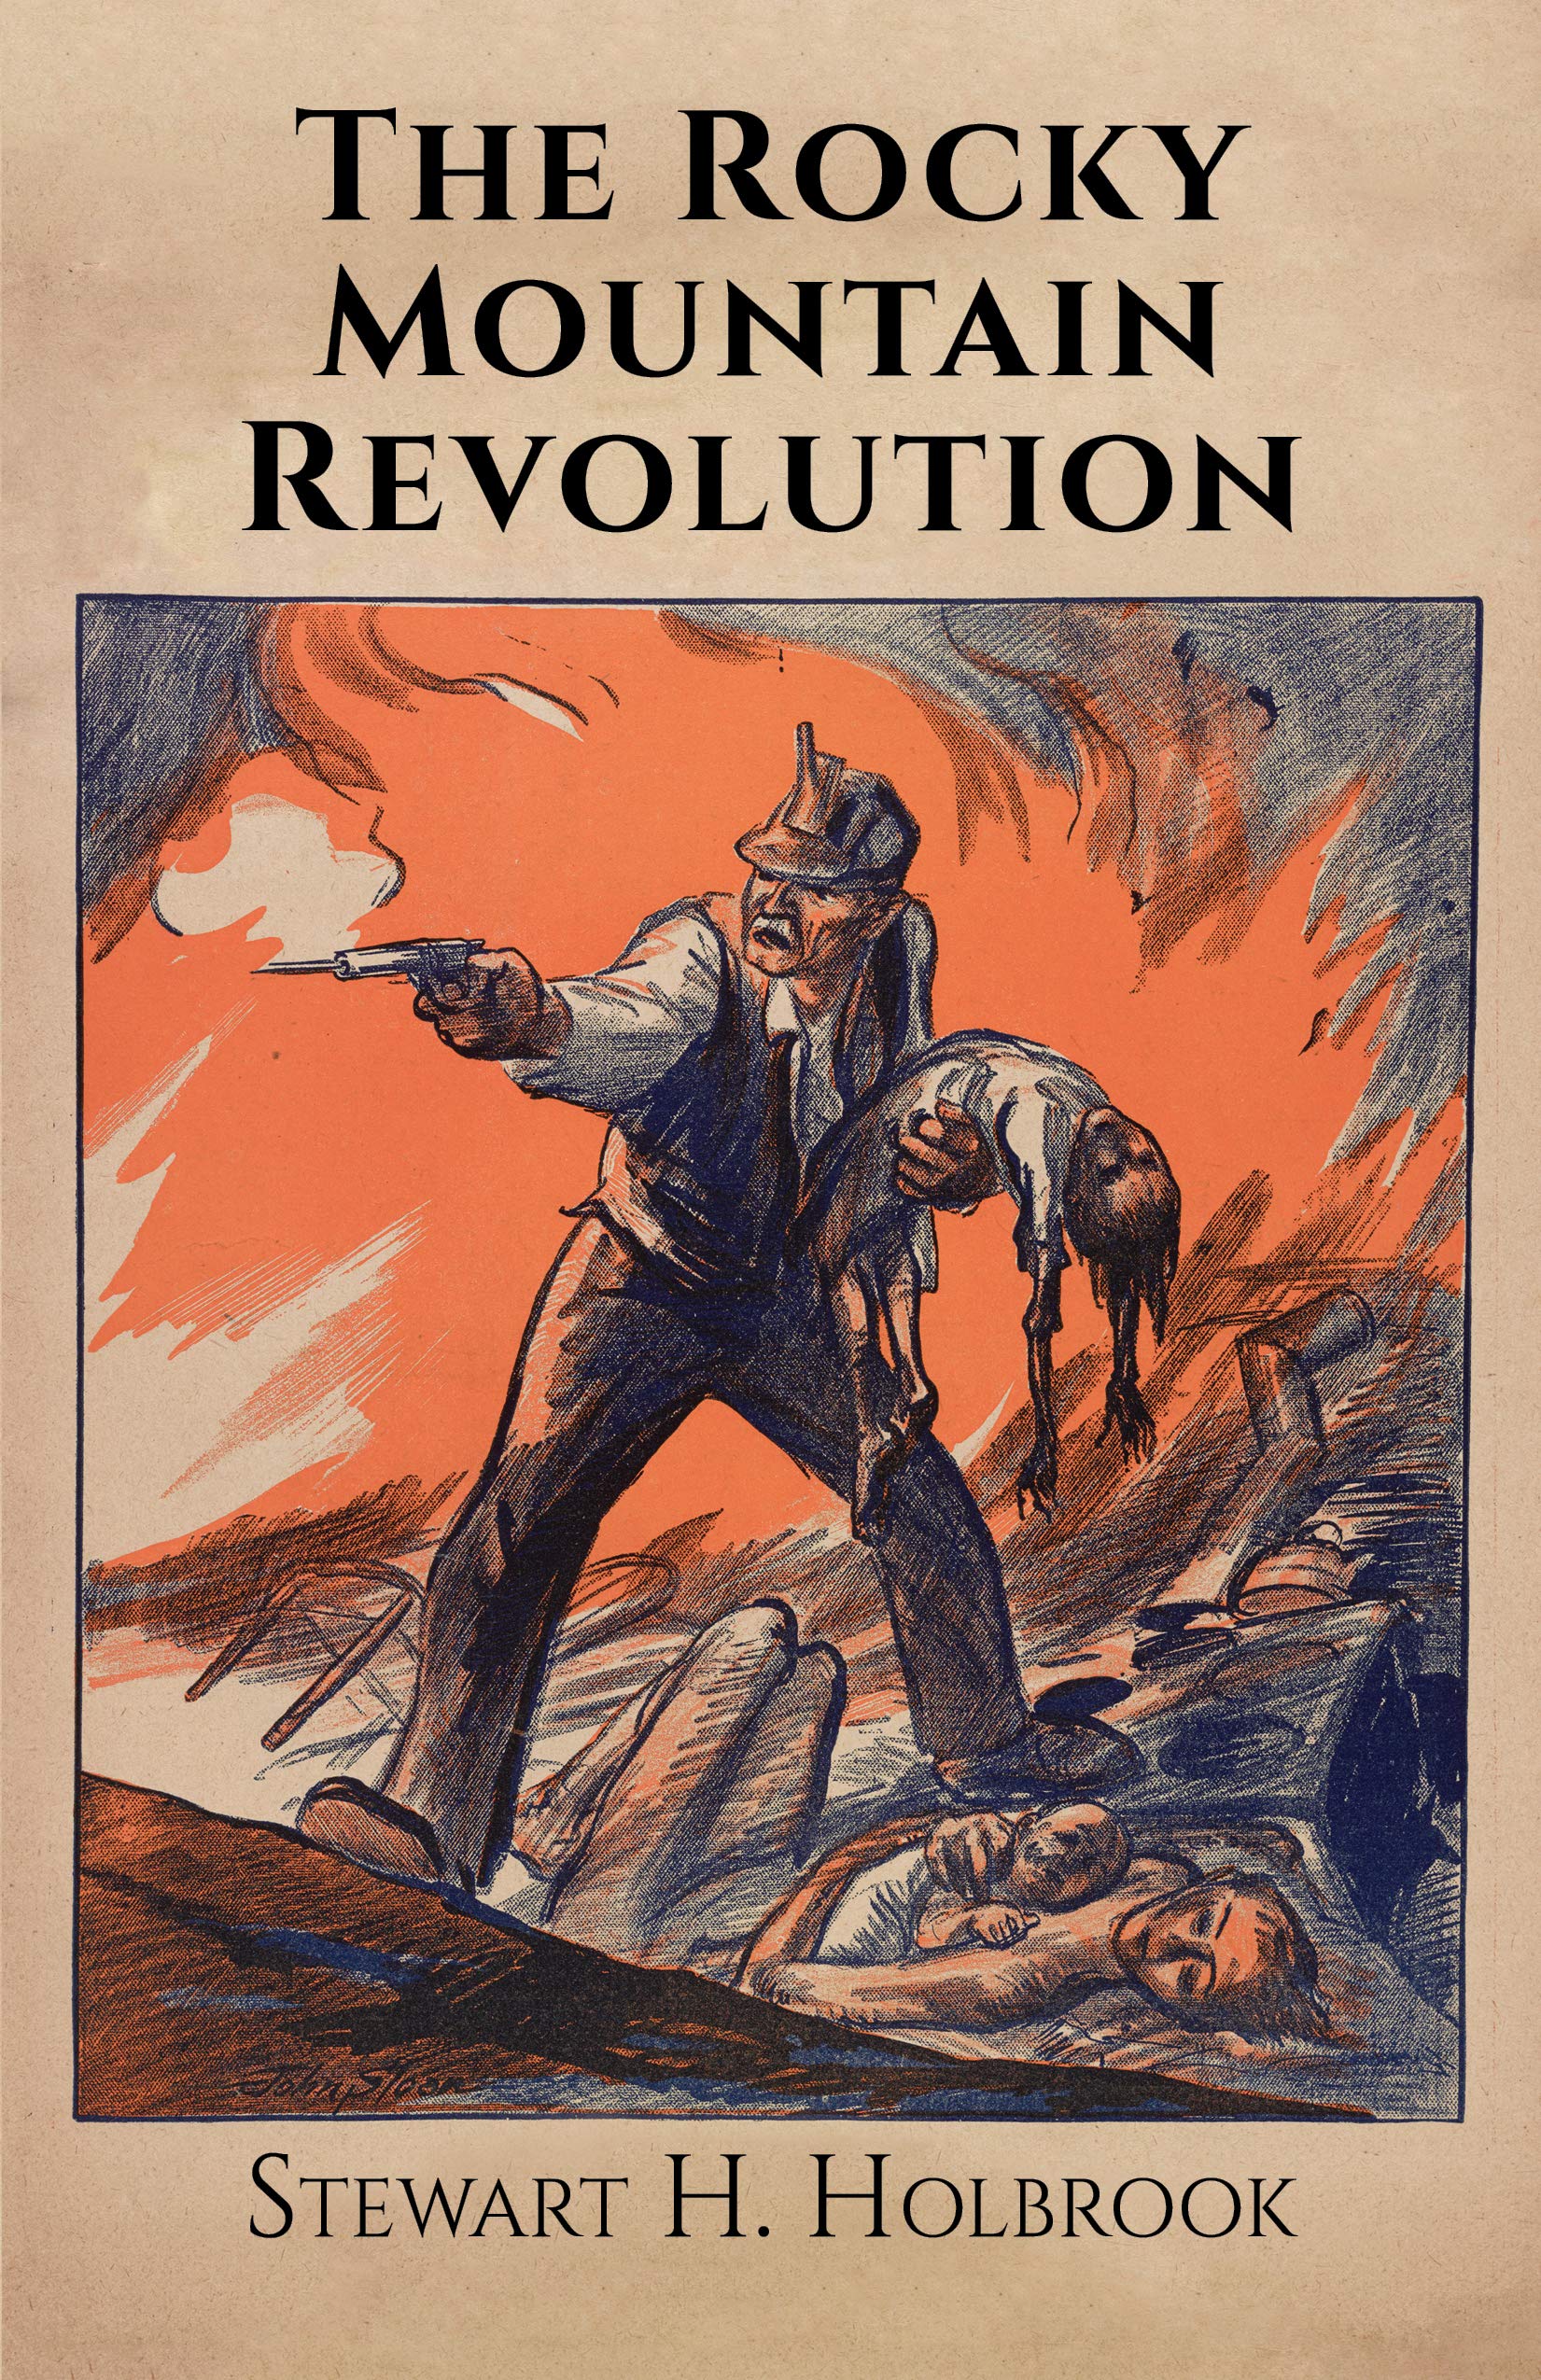 The Rocky Mountain revolution (book cover)